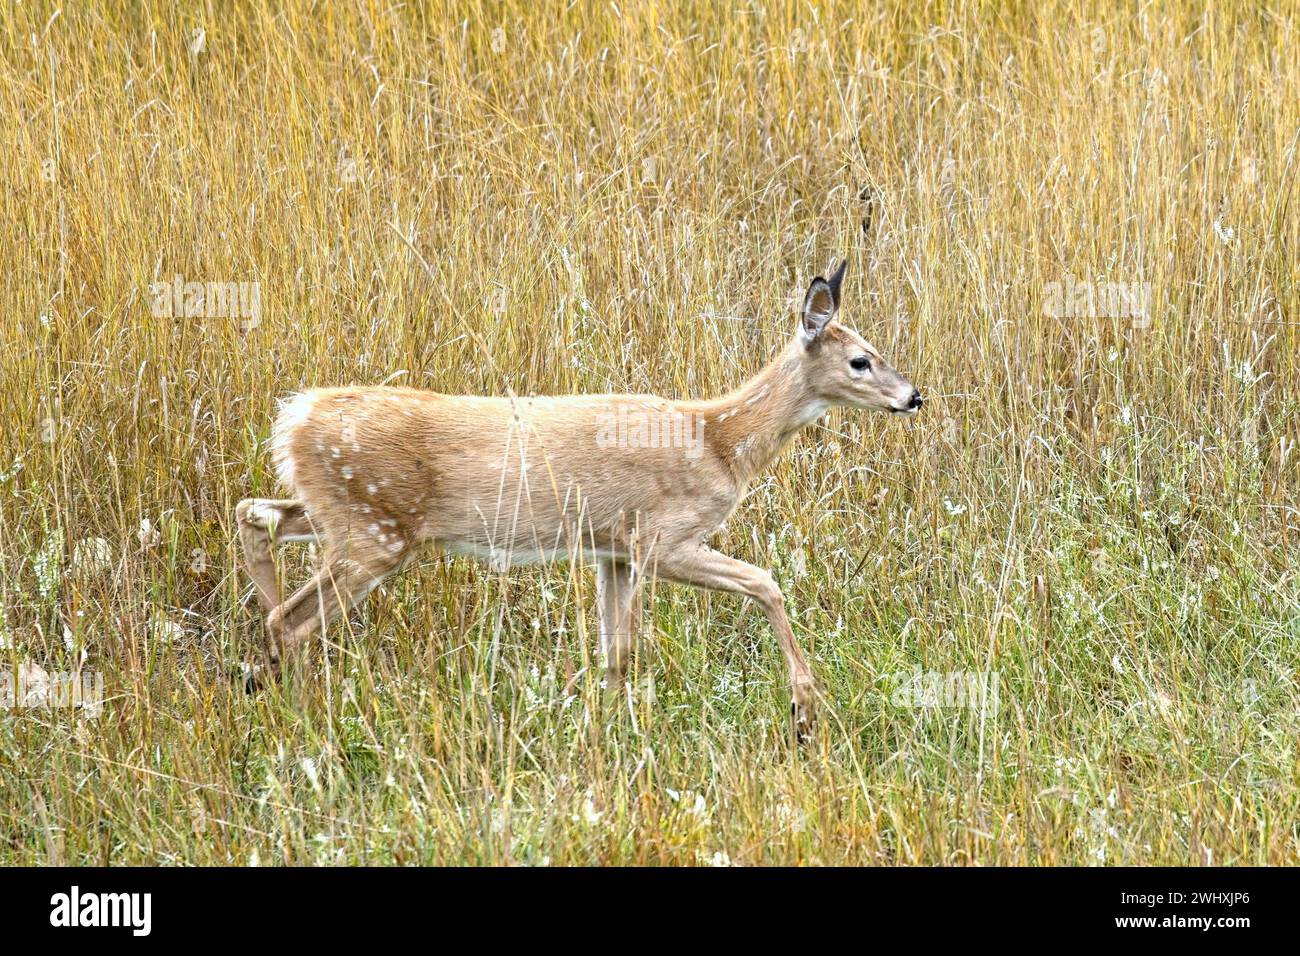 Una femmina di cervo cammina nell'erba. Foto Stock